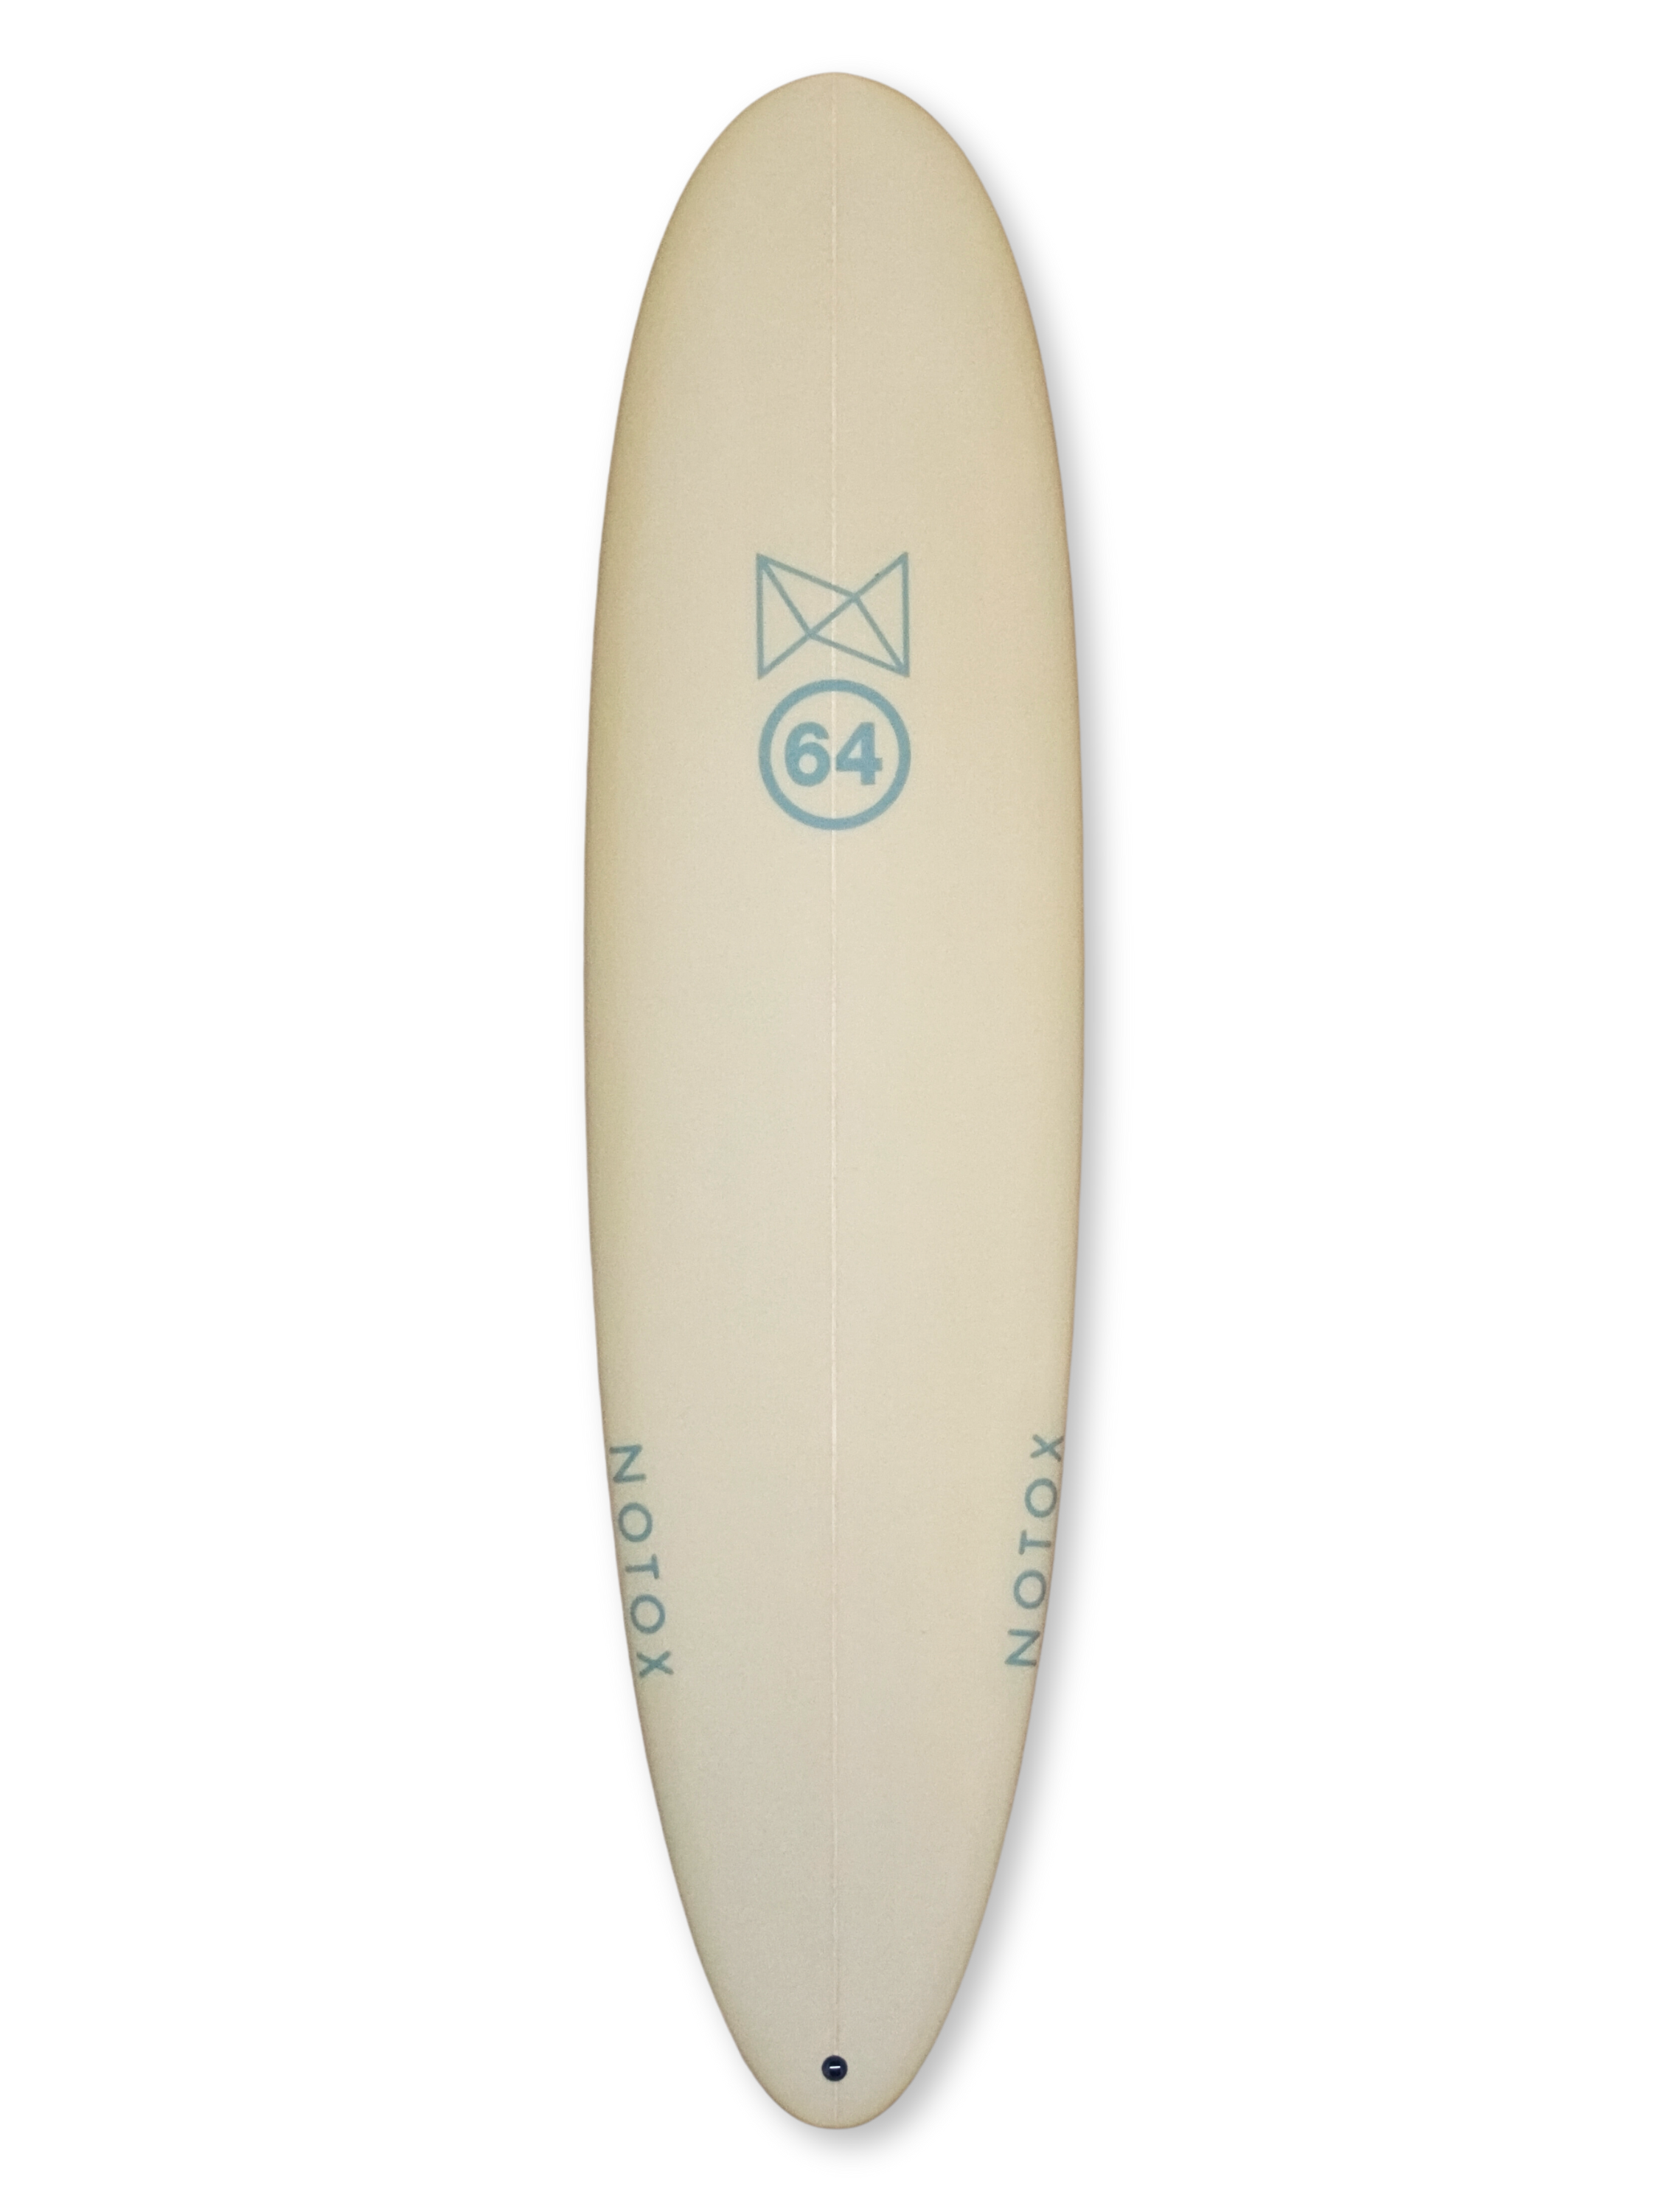 Devant de la planche de surf 64 x NOTOX avec logos